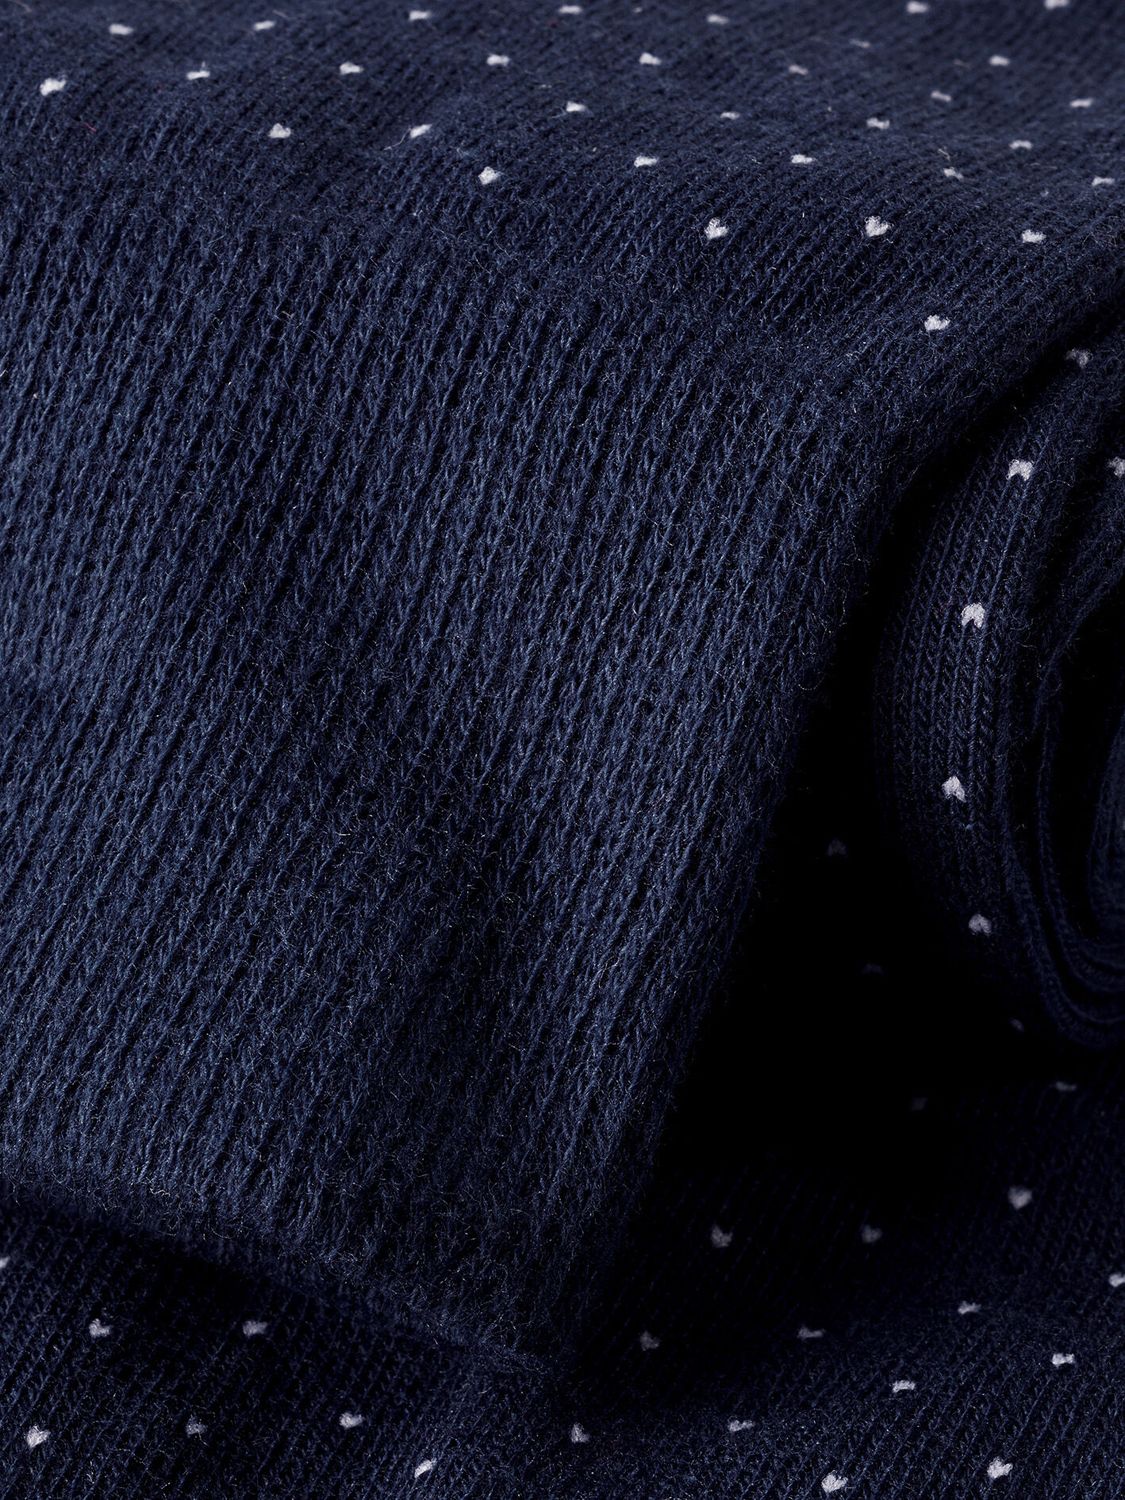 Buy Charles Tyrwhitt  French Micro Dash Socks, Navy & White Online at johnlewis.com